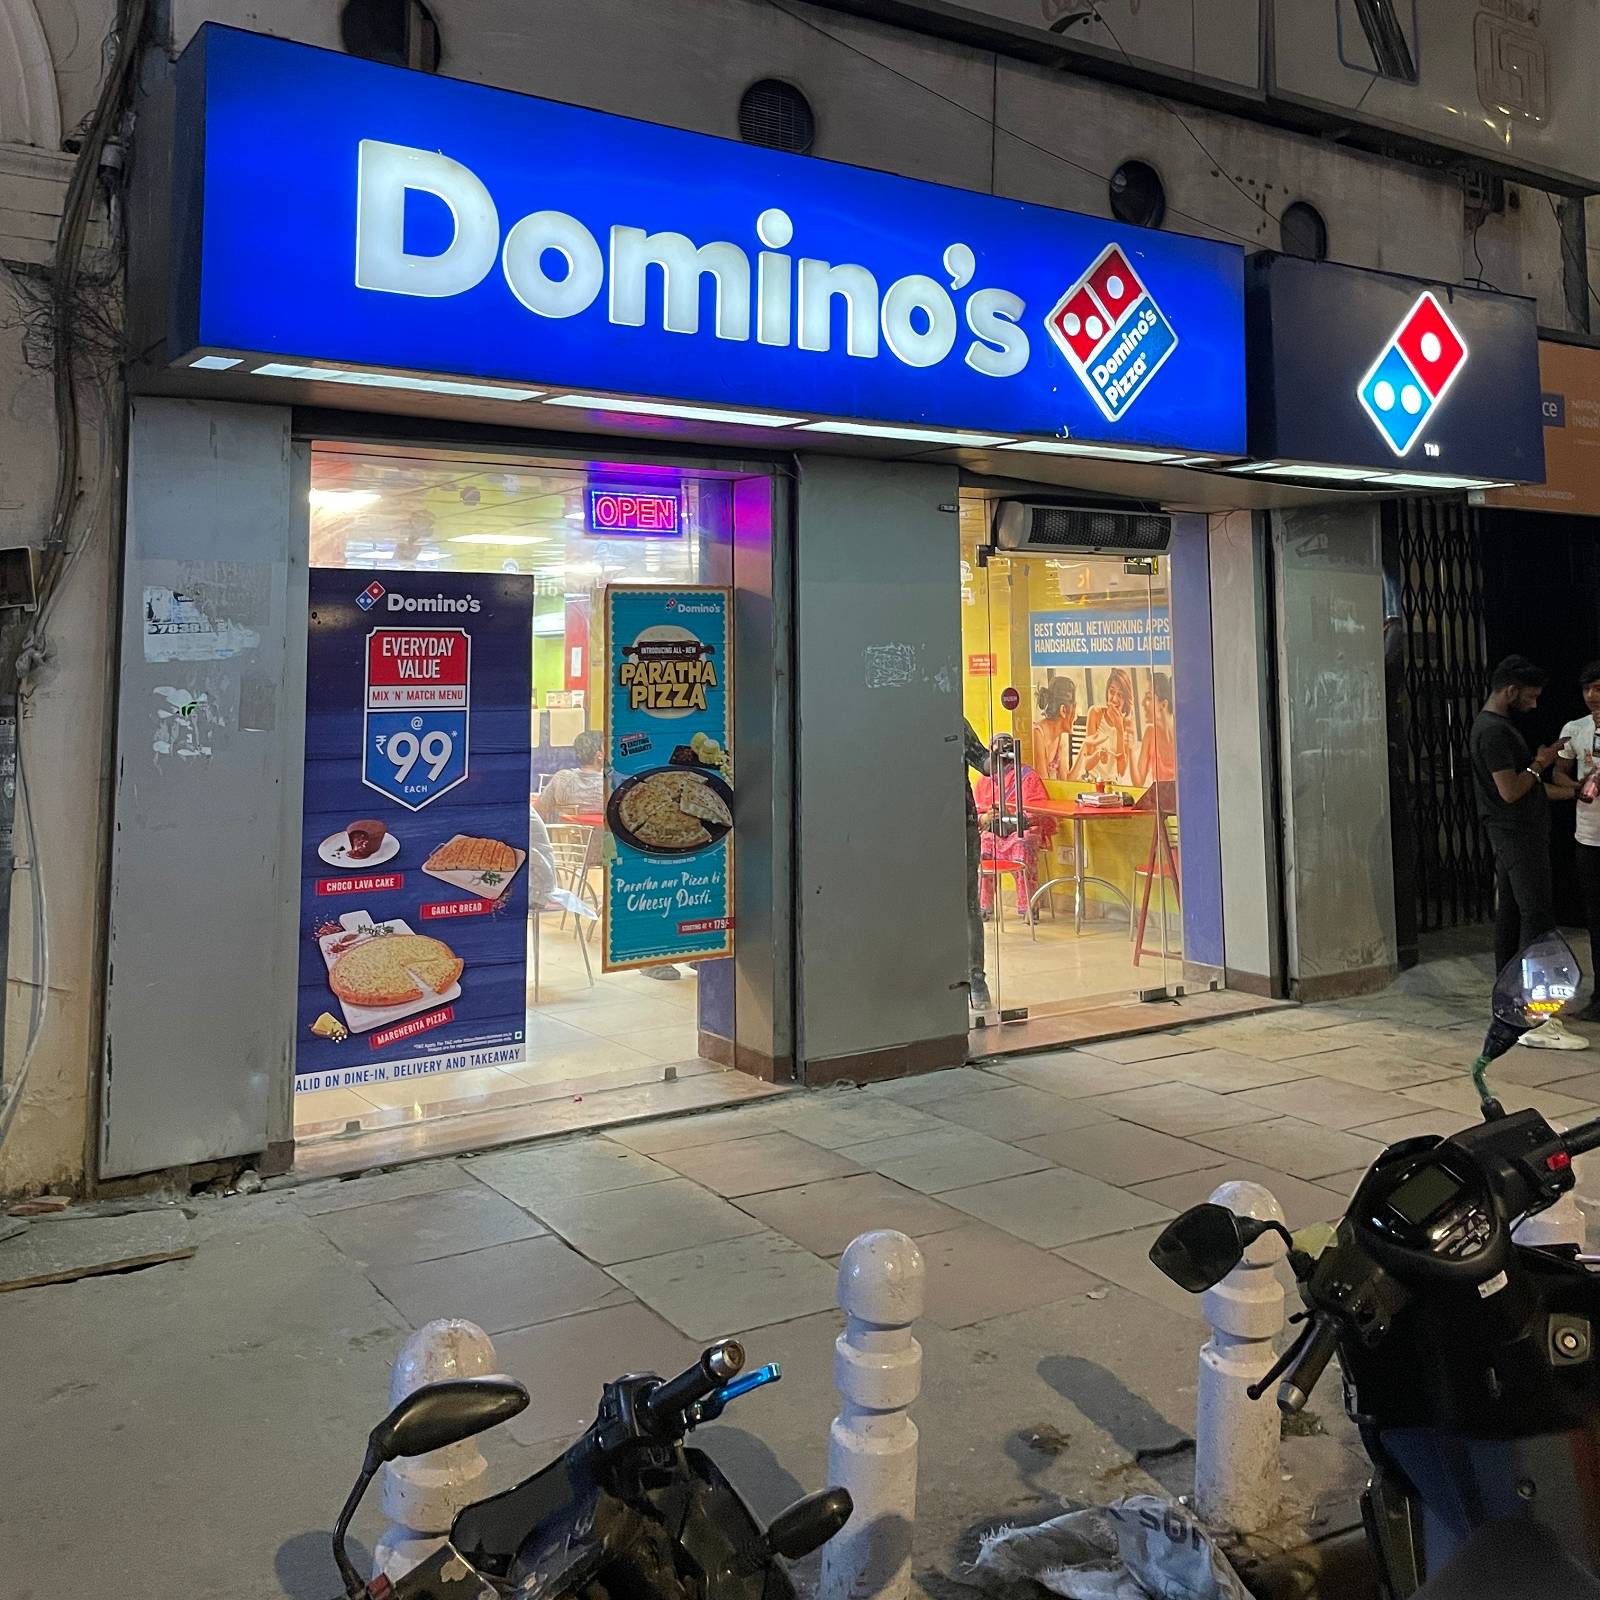 Domino's India operator Jubilant's Q1 profit falls 74% as costs bite